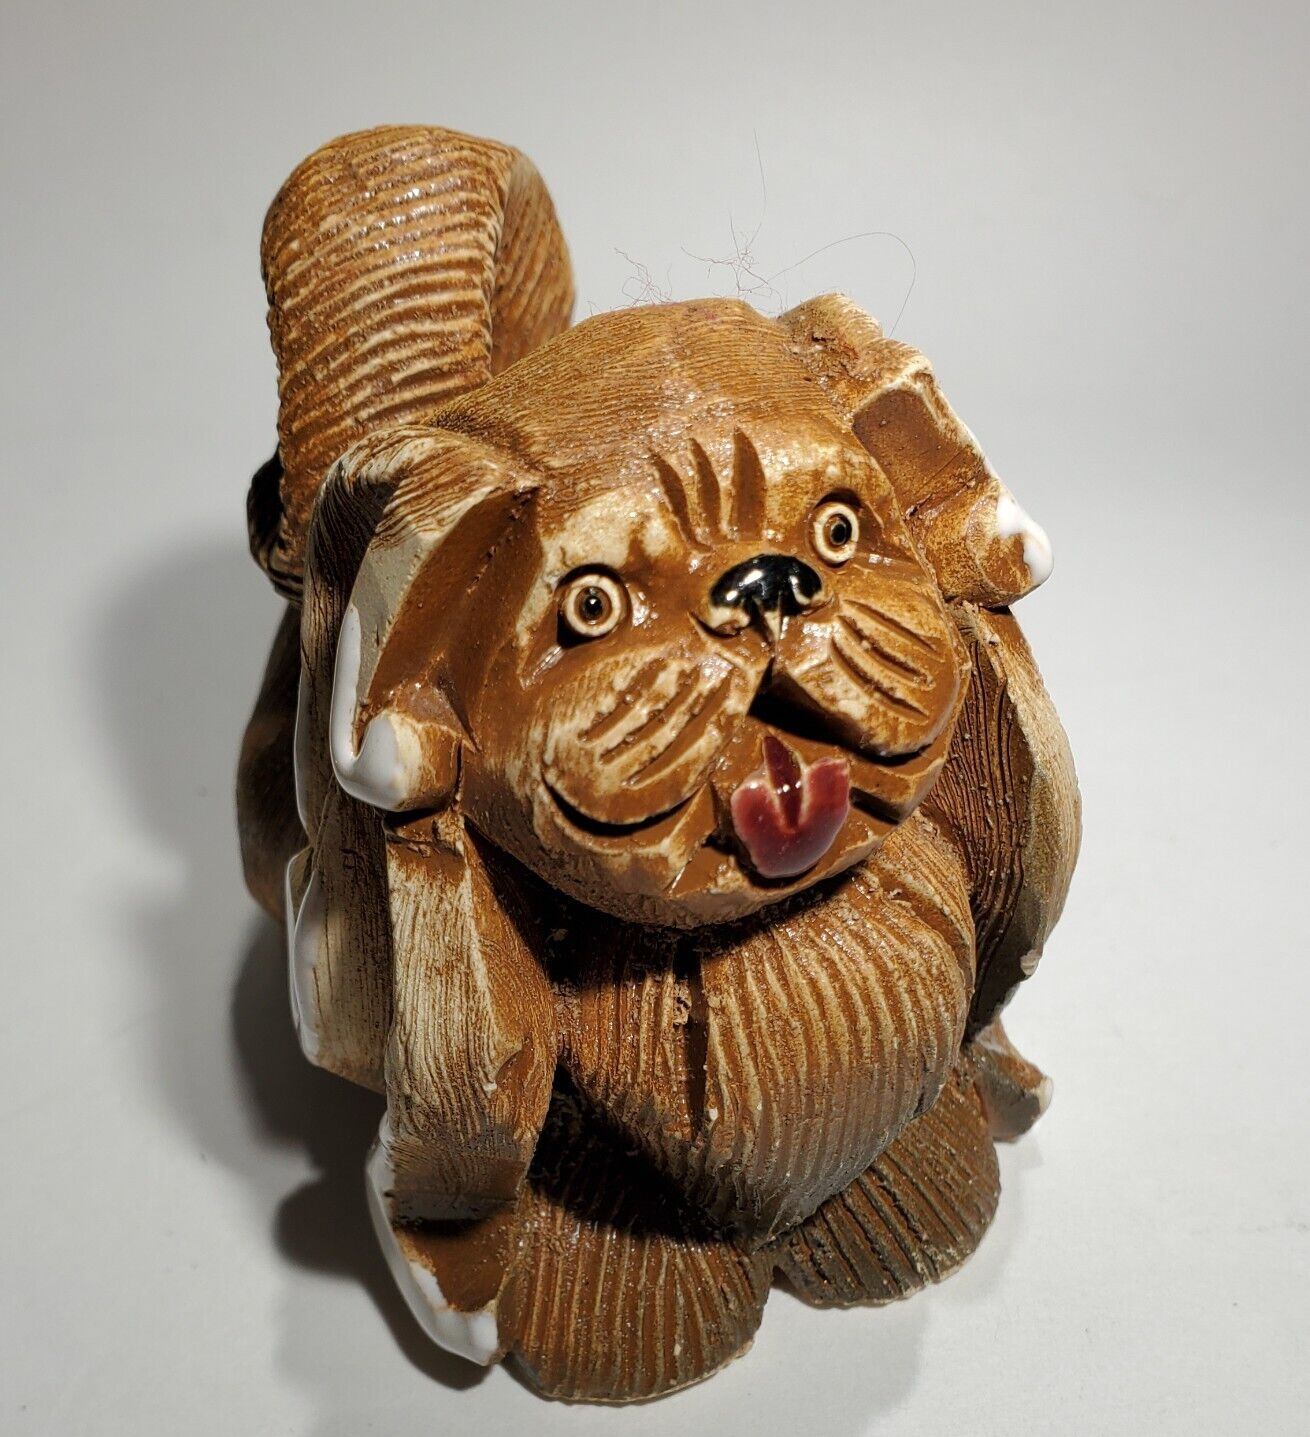 Vintage Artesiana Rinconada Pekingese Dog Sculpture Uruguay Animal Figures Gift